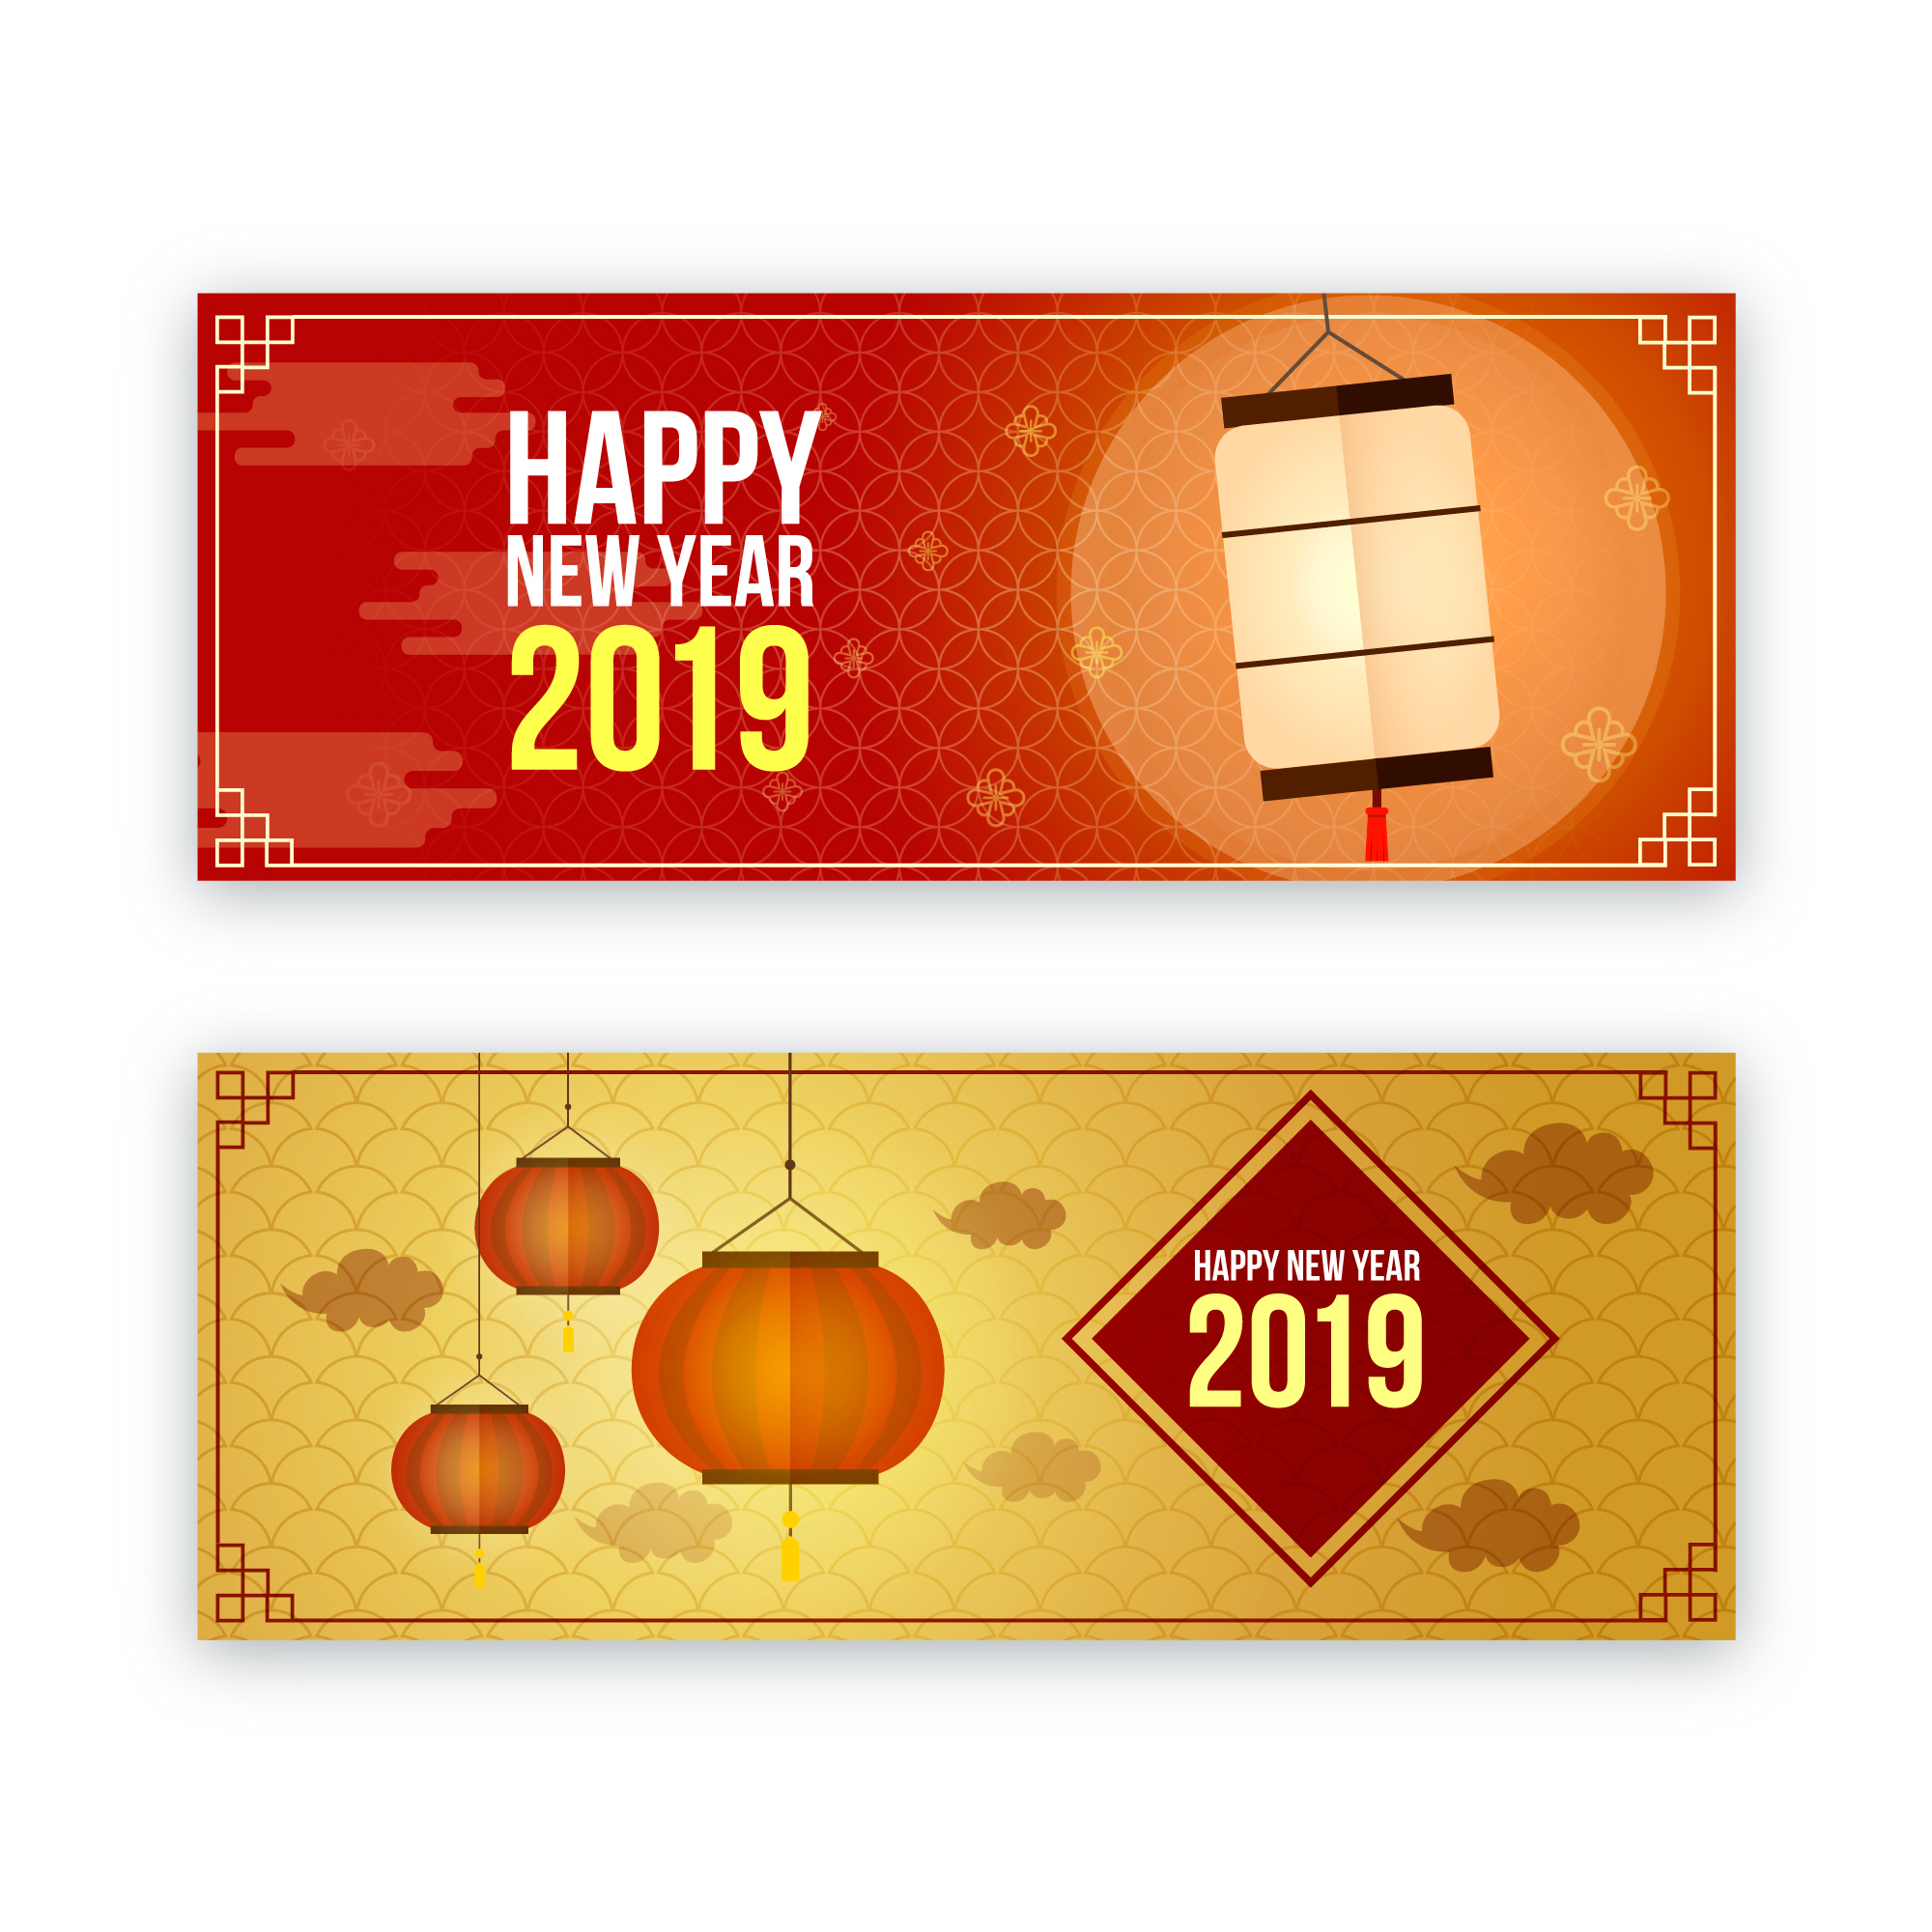 2019新年农历猪年贺卡矢量素材模板 2019 New Year Lunar Year Of The Pig Greeting Card Vector Material Template插图6